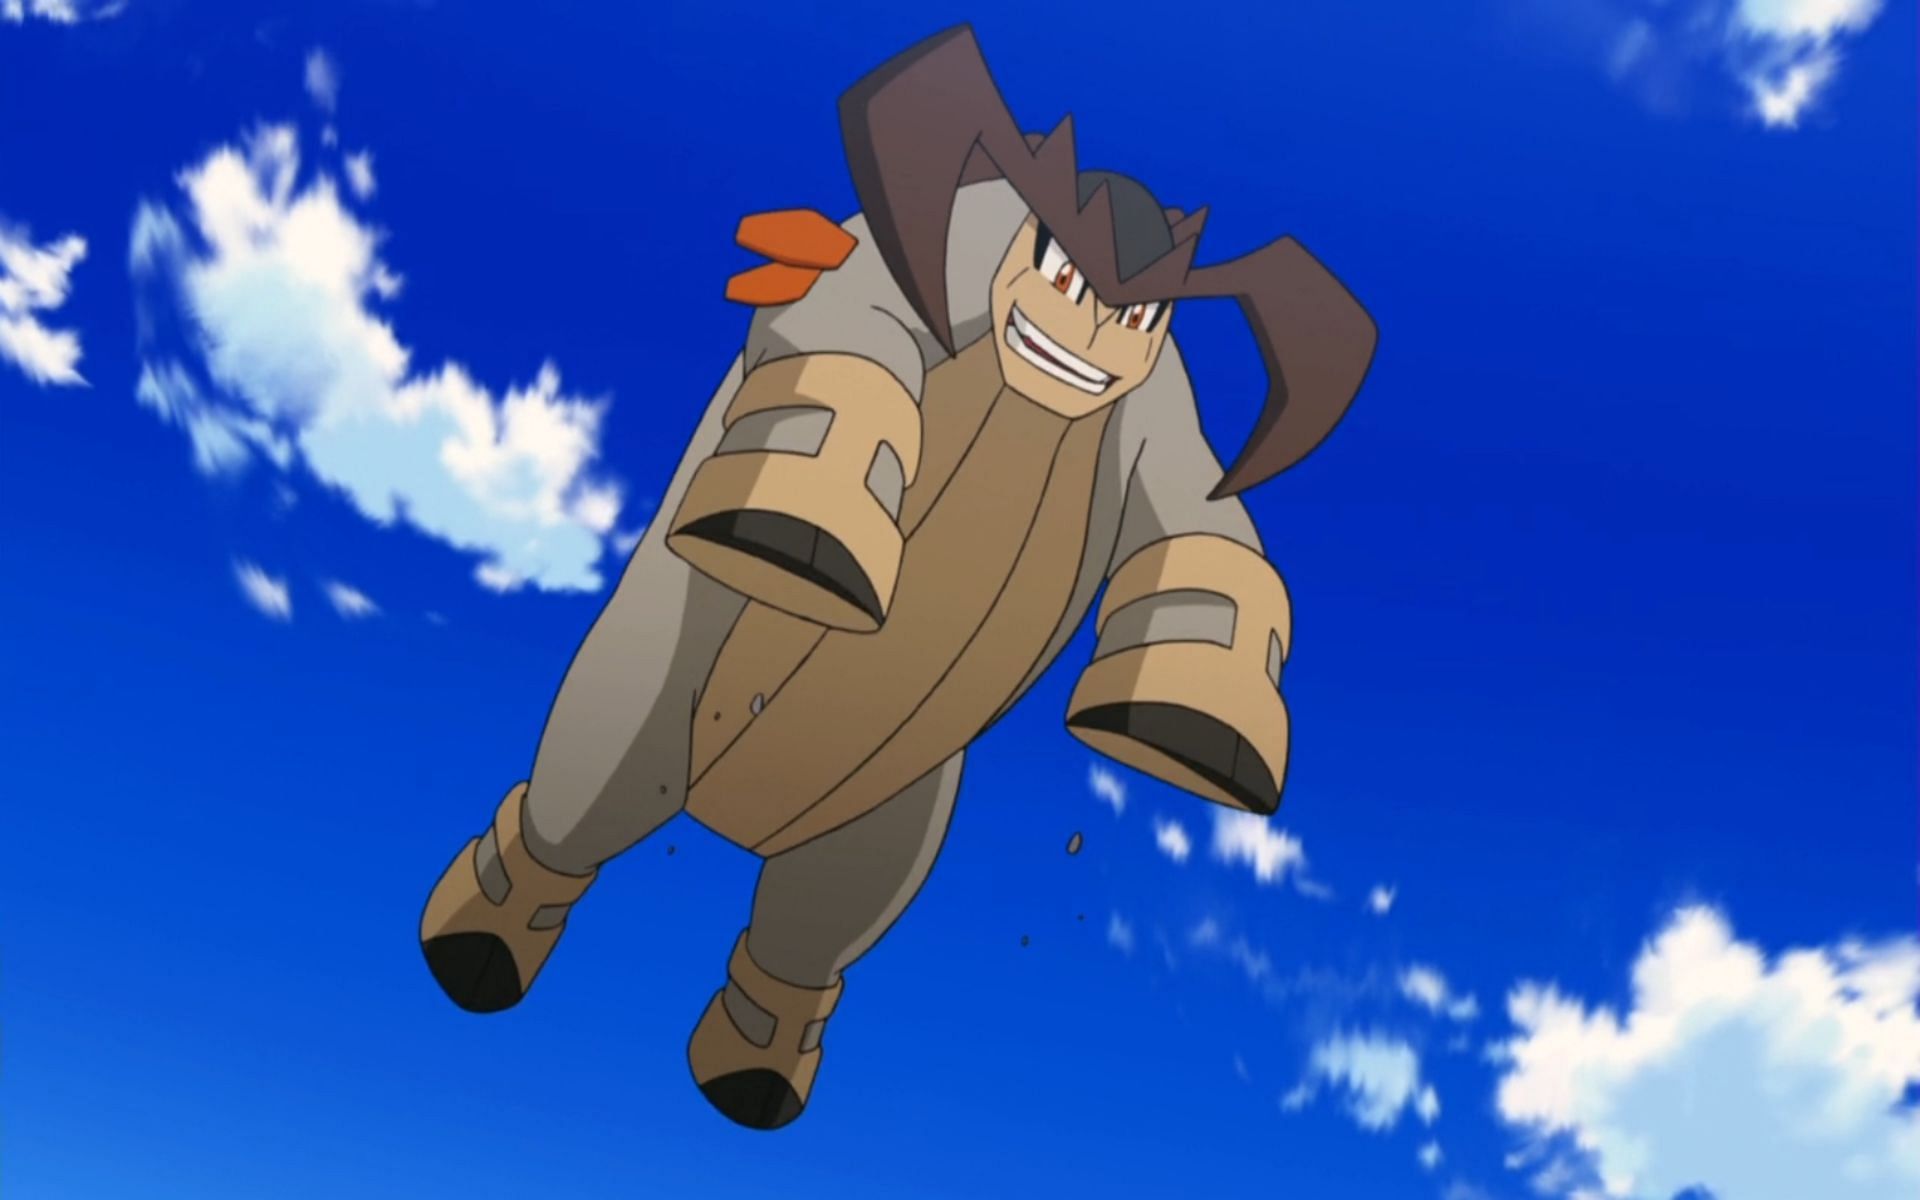 Terrakion can learn strong moves like Earthquake and Close Combat (Image via The Pokemon Company)